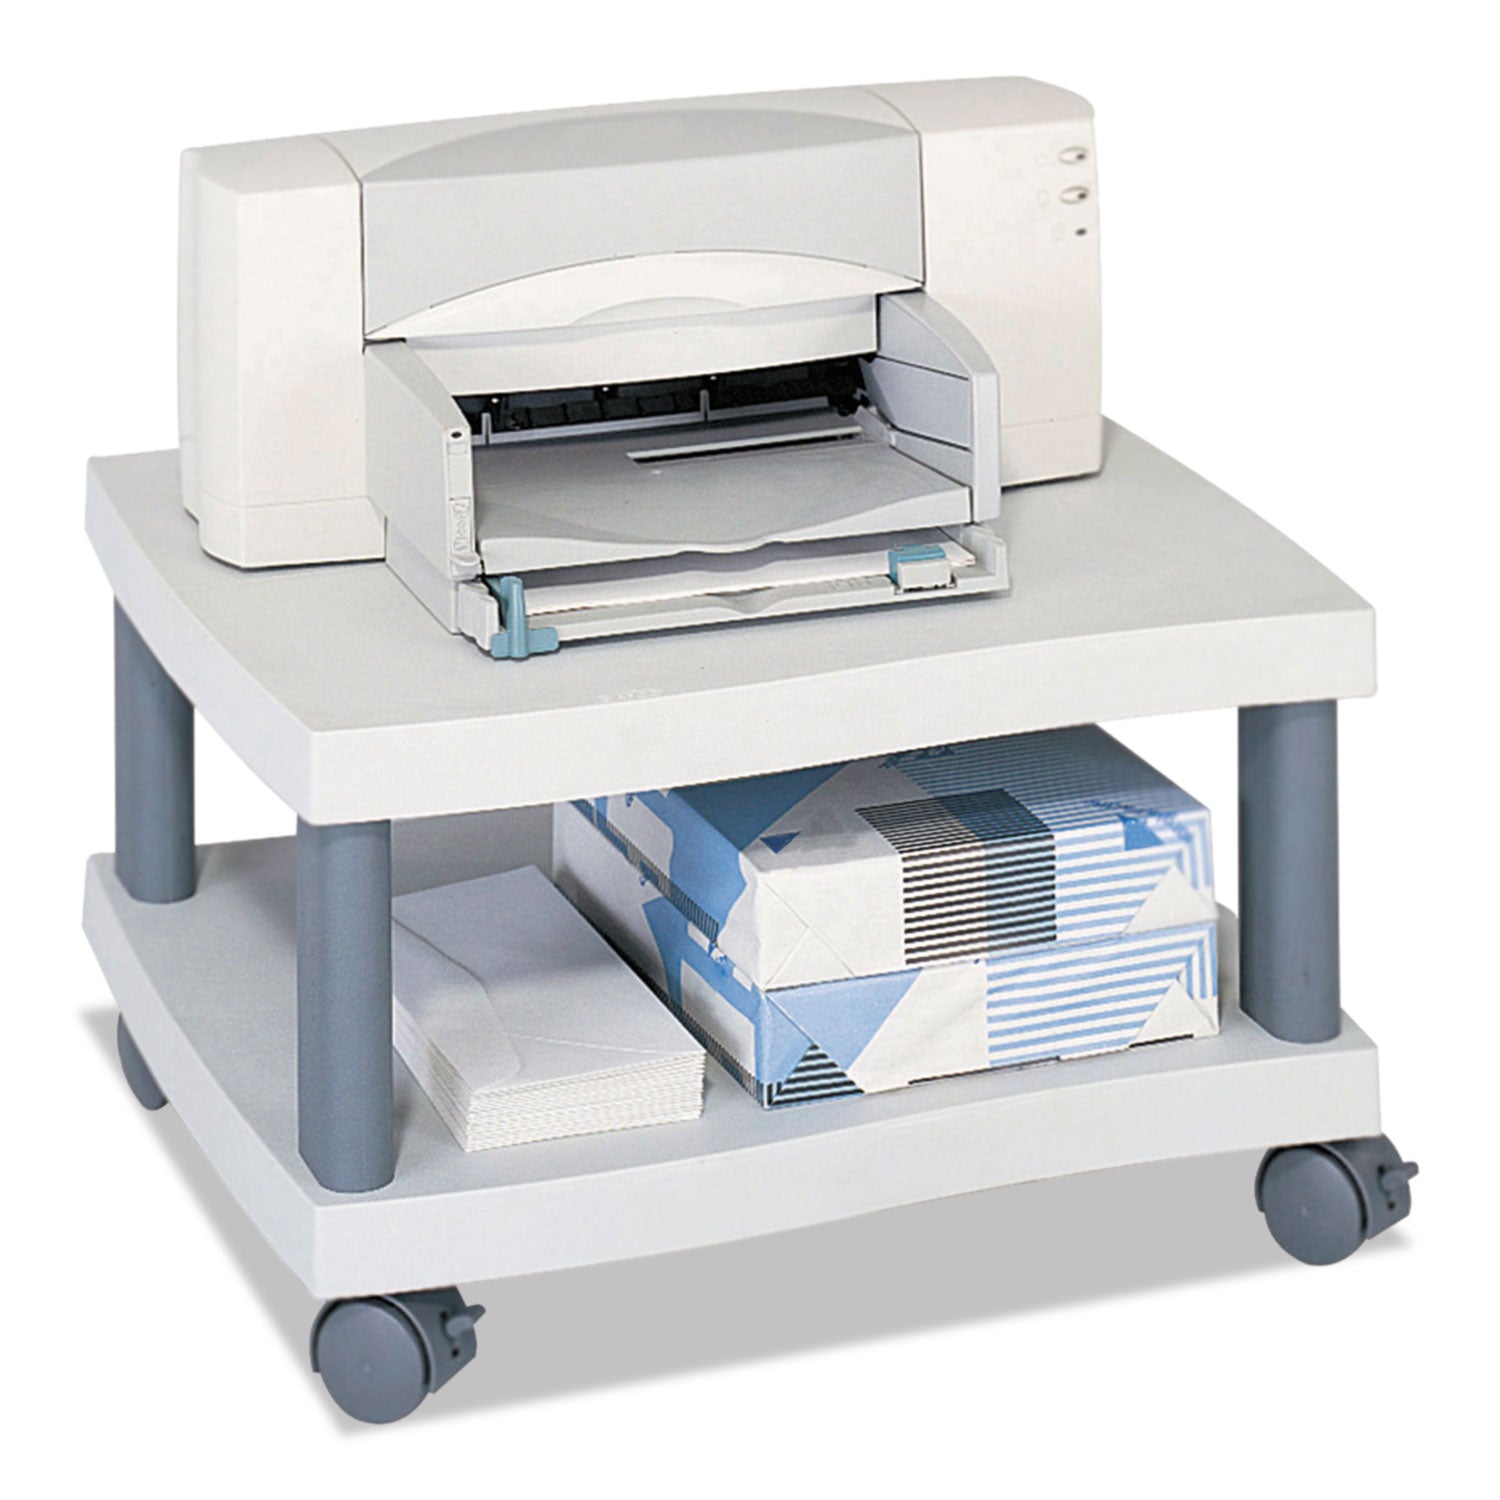 Wave Design Under-Desk Printer Stand, Plastic, 2 Shelves, 20" x 17.5" x 11.5", White/Charcoal Gray - 